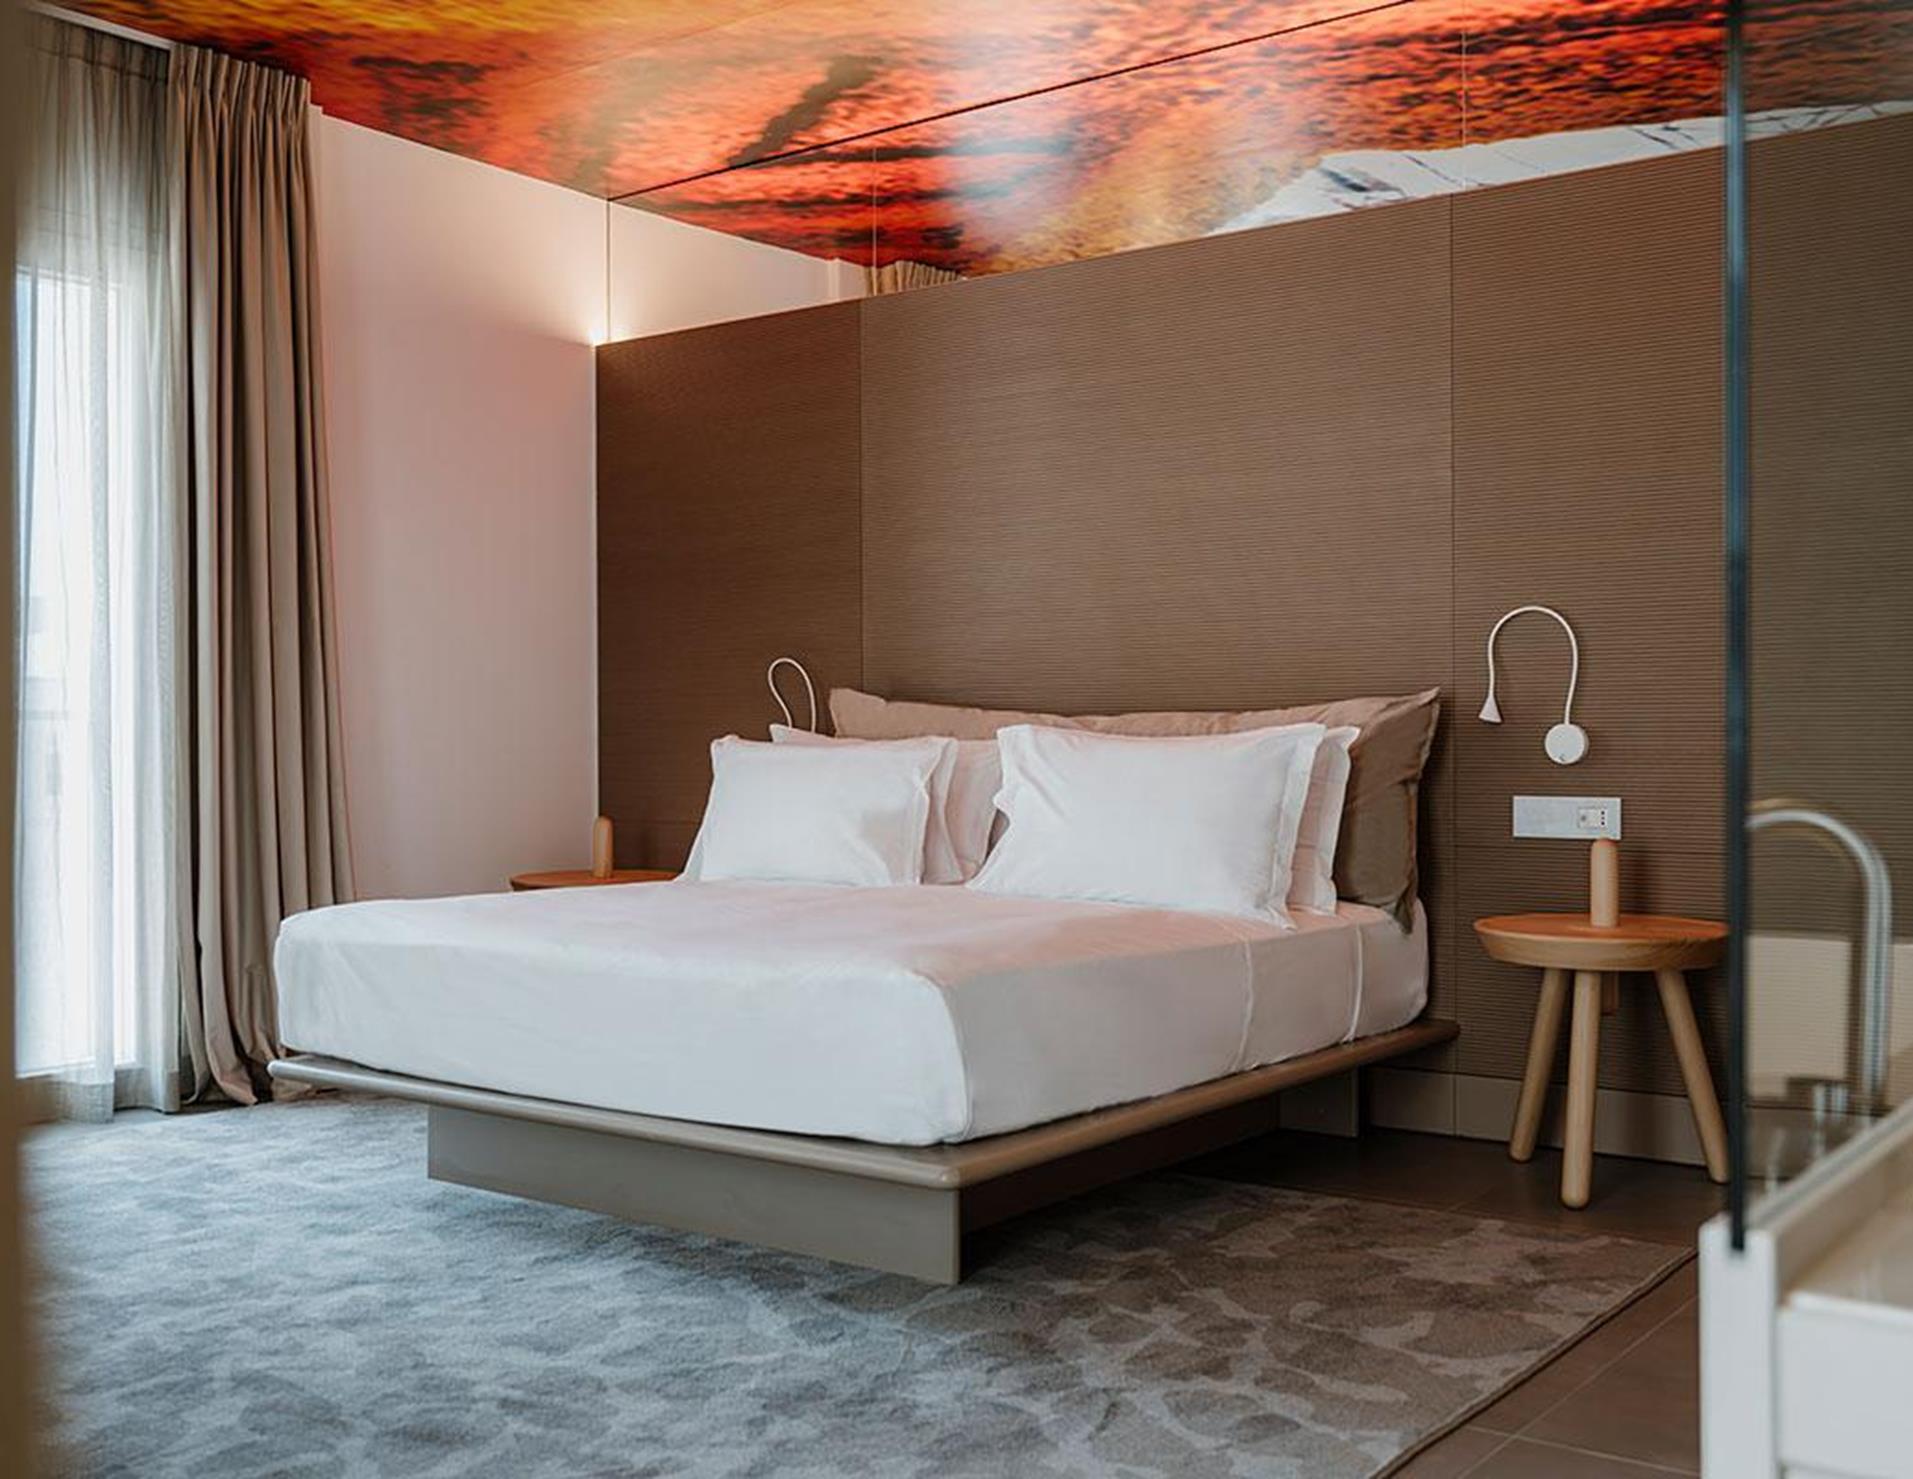 Biancodonda Lifestyle Hotel & Spa - Room 7